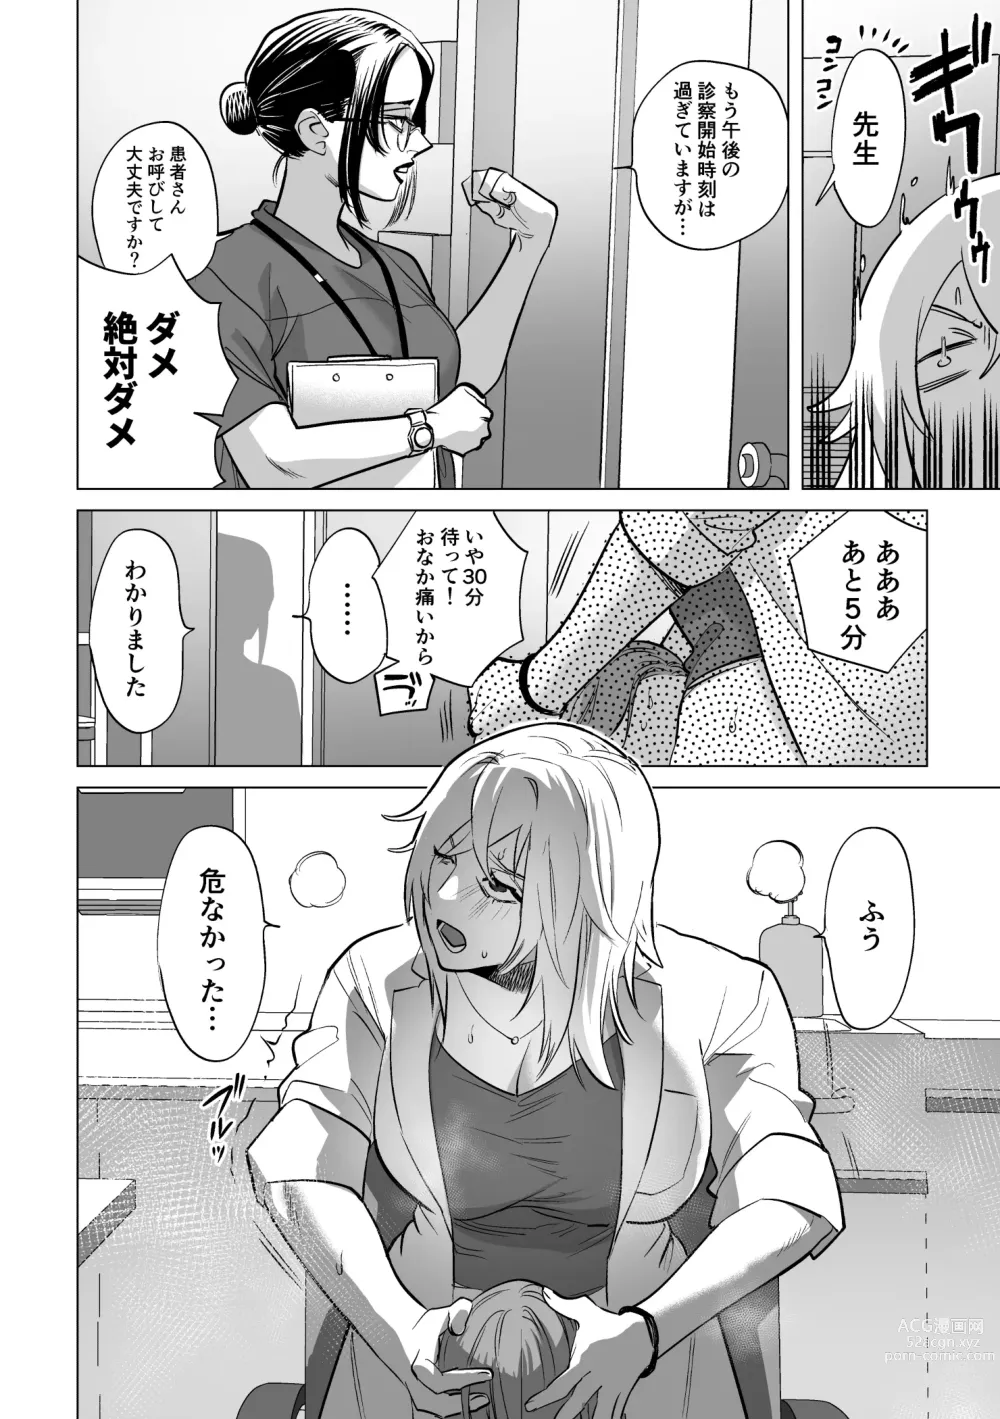 Page 7 of doujinshi 30-Funkan hitasura Ecchi